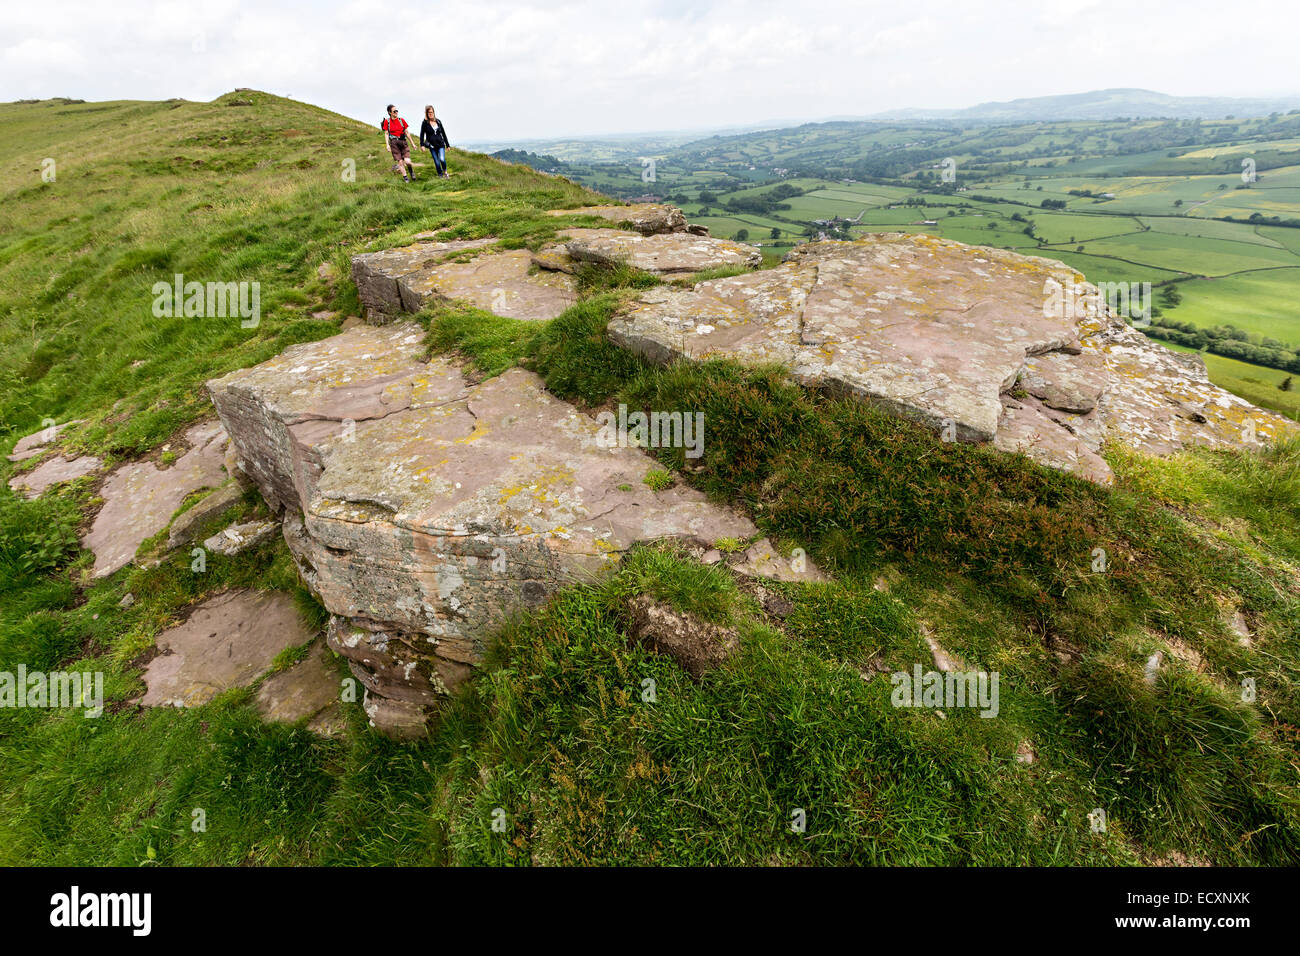 Two walkers on Bryn Arw hill near Abergavenny, Wales, UK Stock Photo